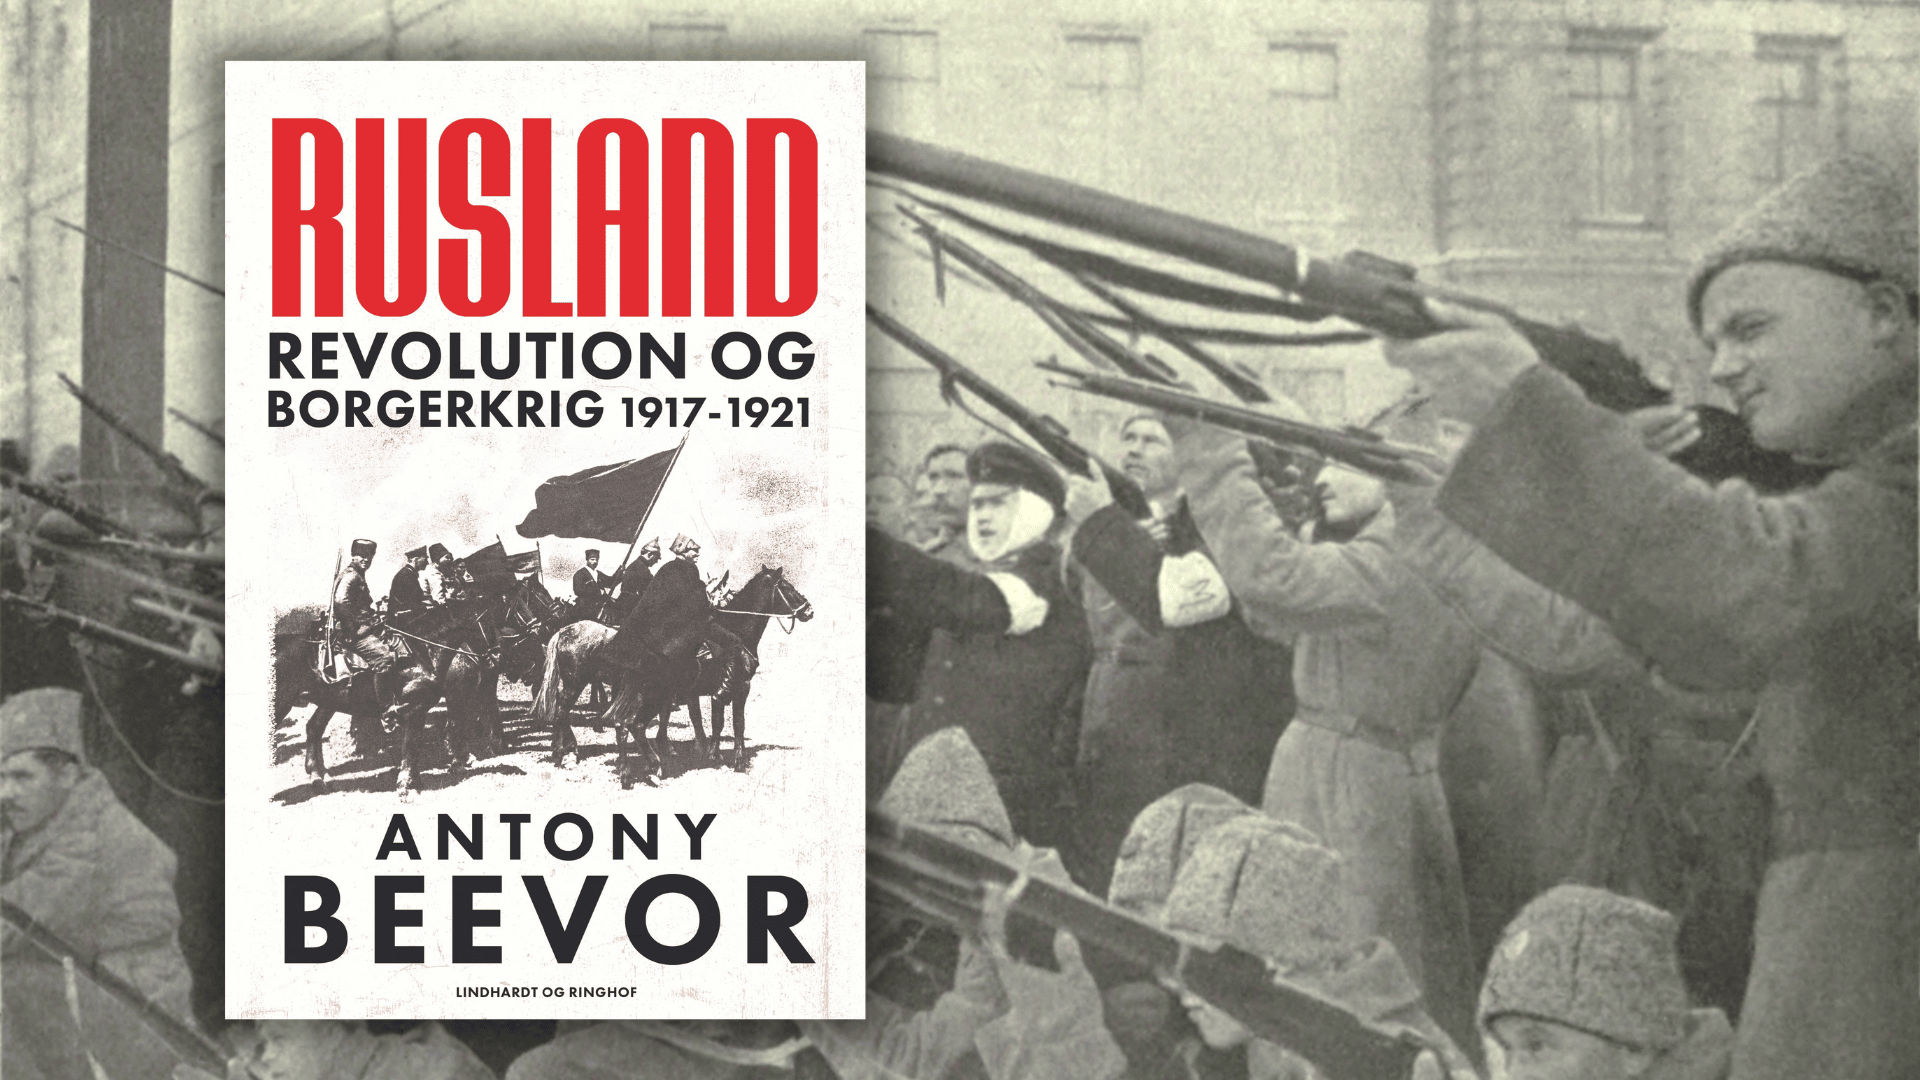 Rusland, Antony Beevor, Rusland - Revolution og borgerkrig 1917-1921